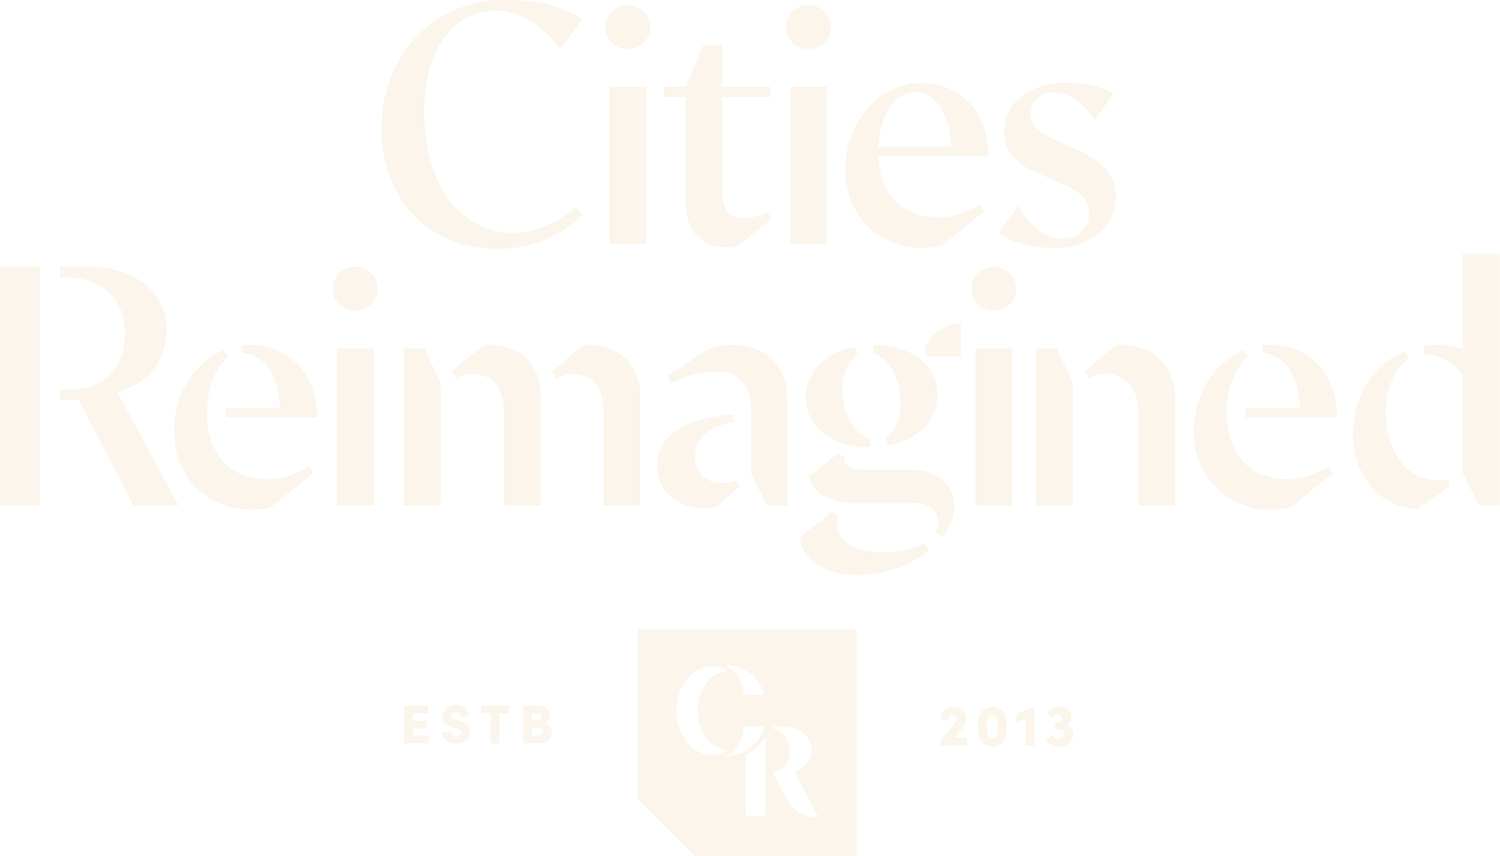 Cities Reimagined